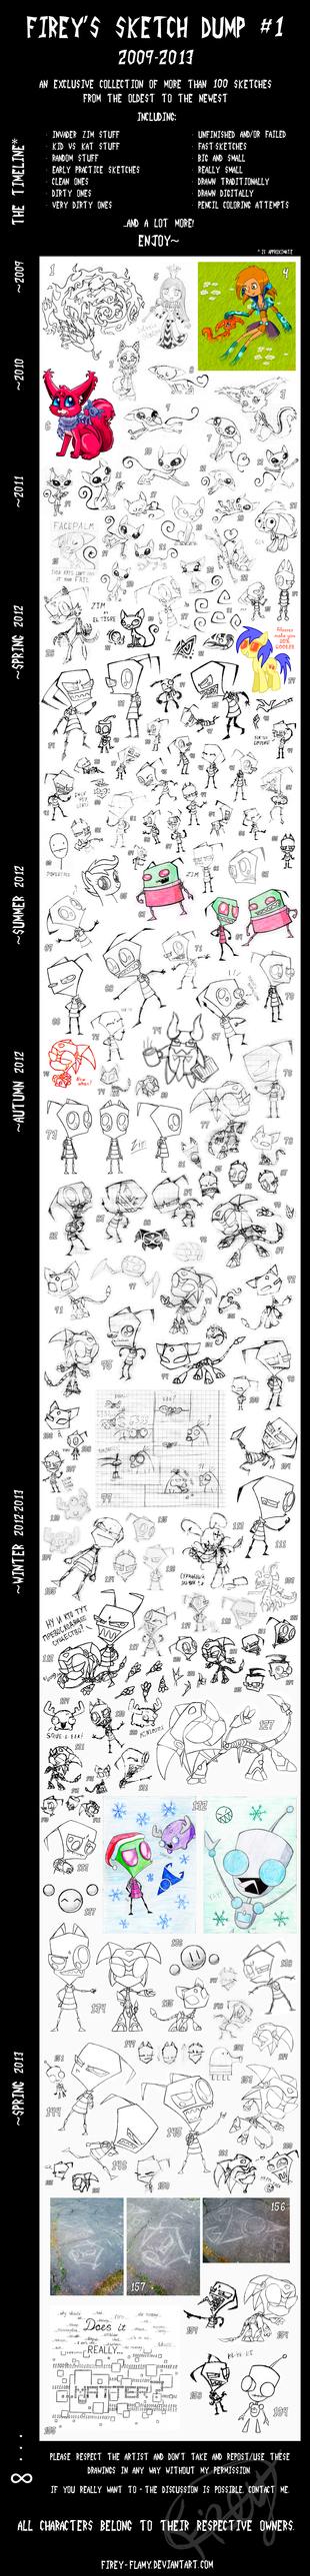 Firey's Sketch Dump #1 (2009-2013)